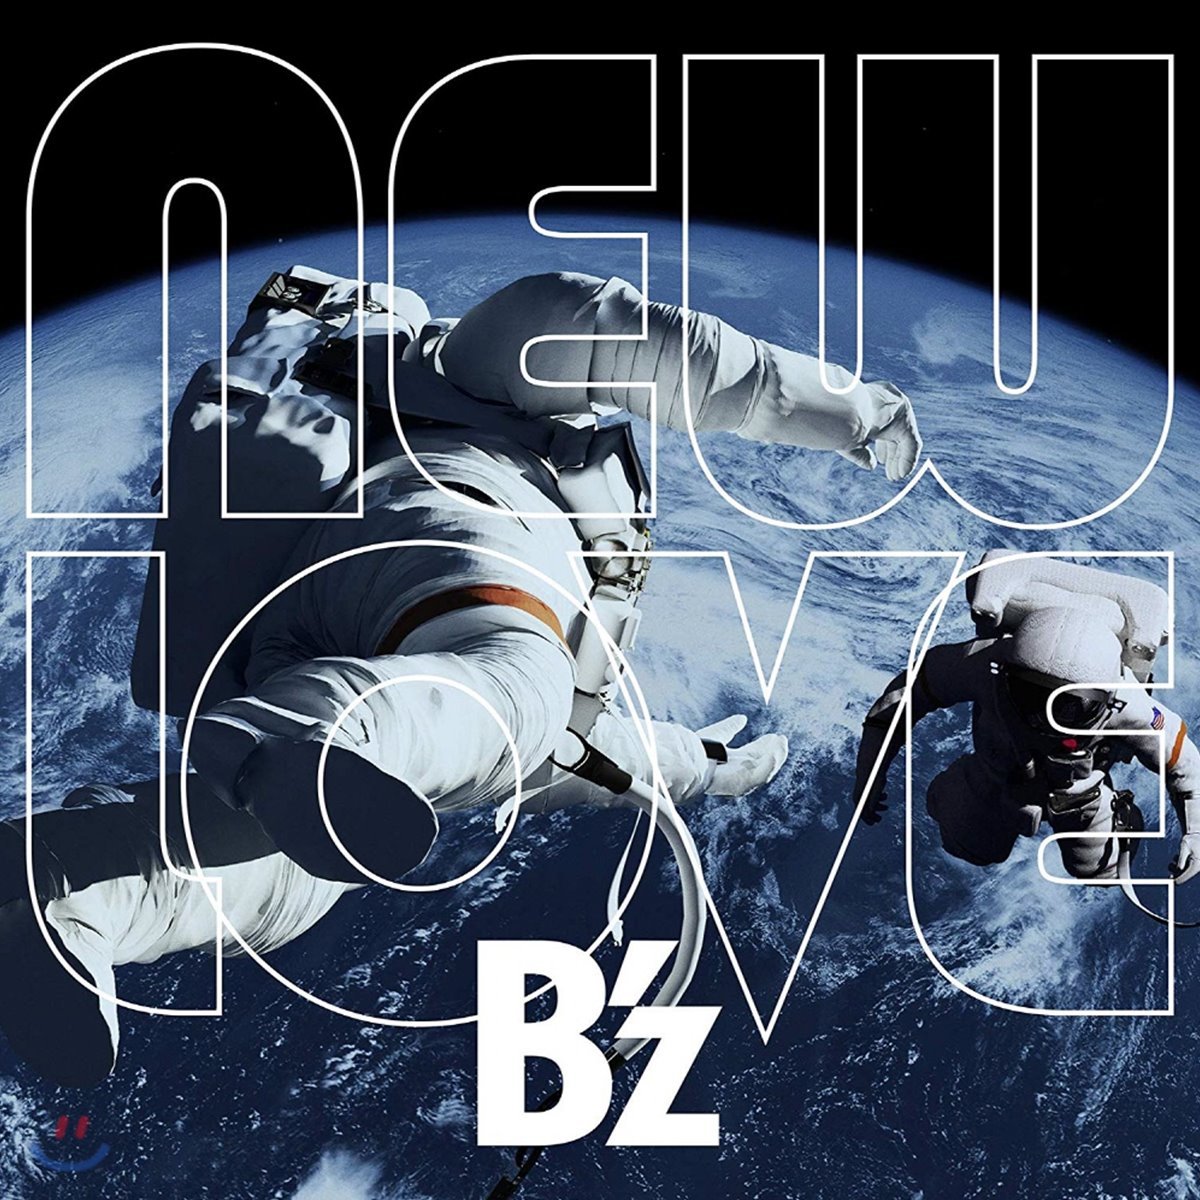 B'z (비즈) - New Love 정규 21집